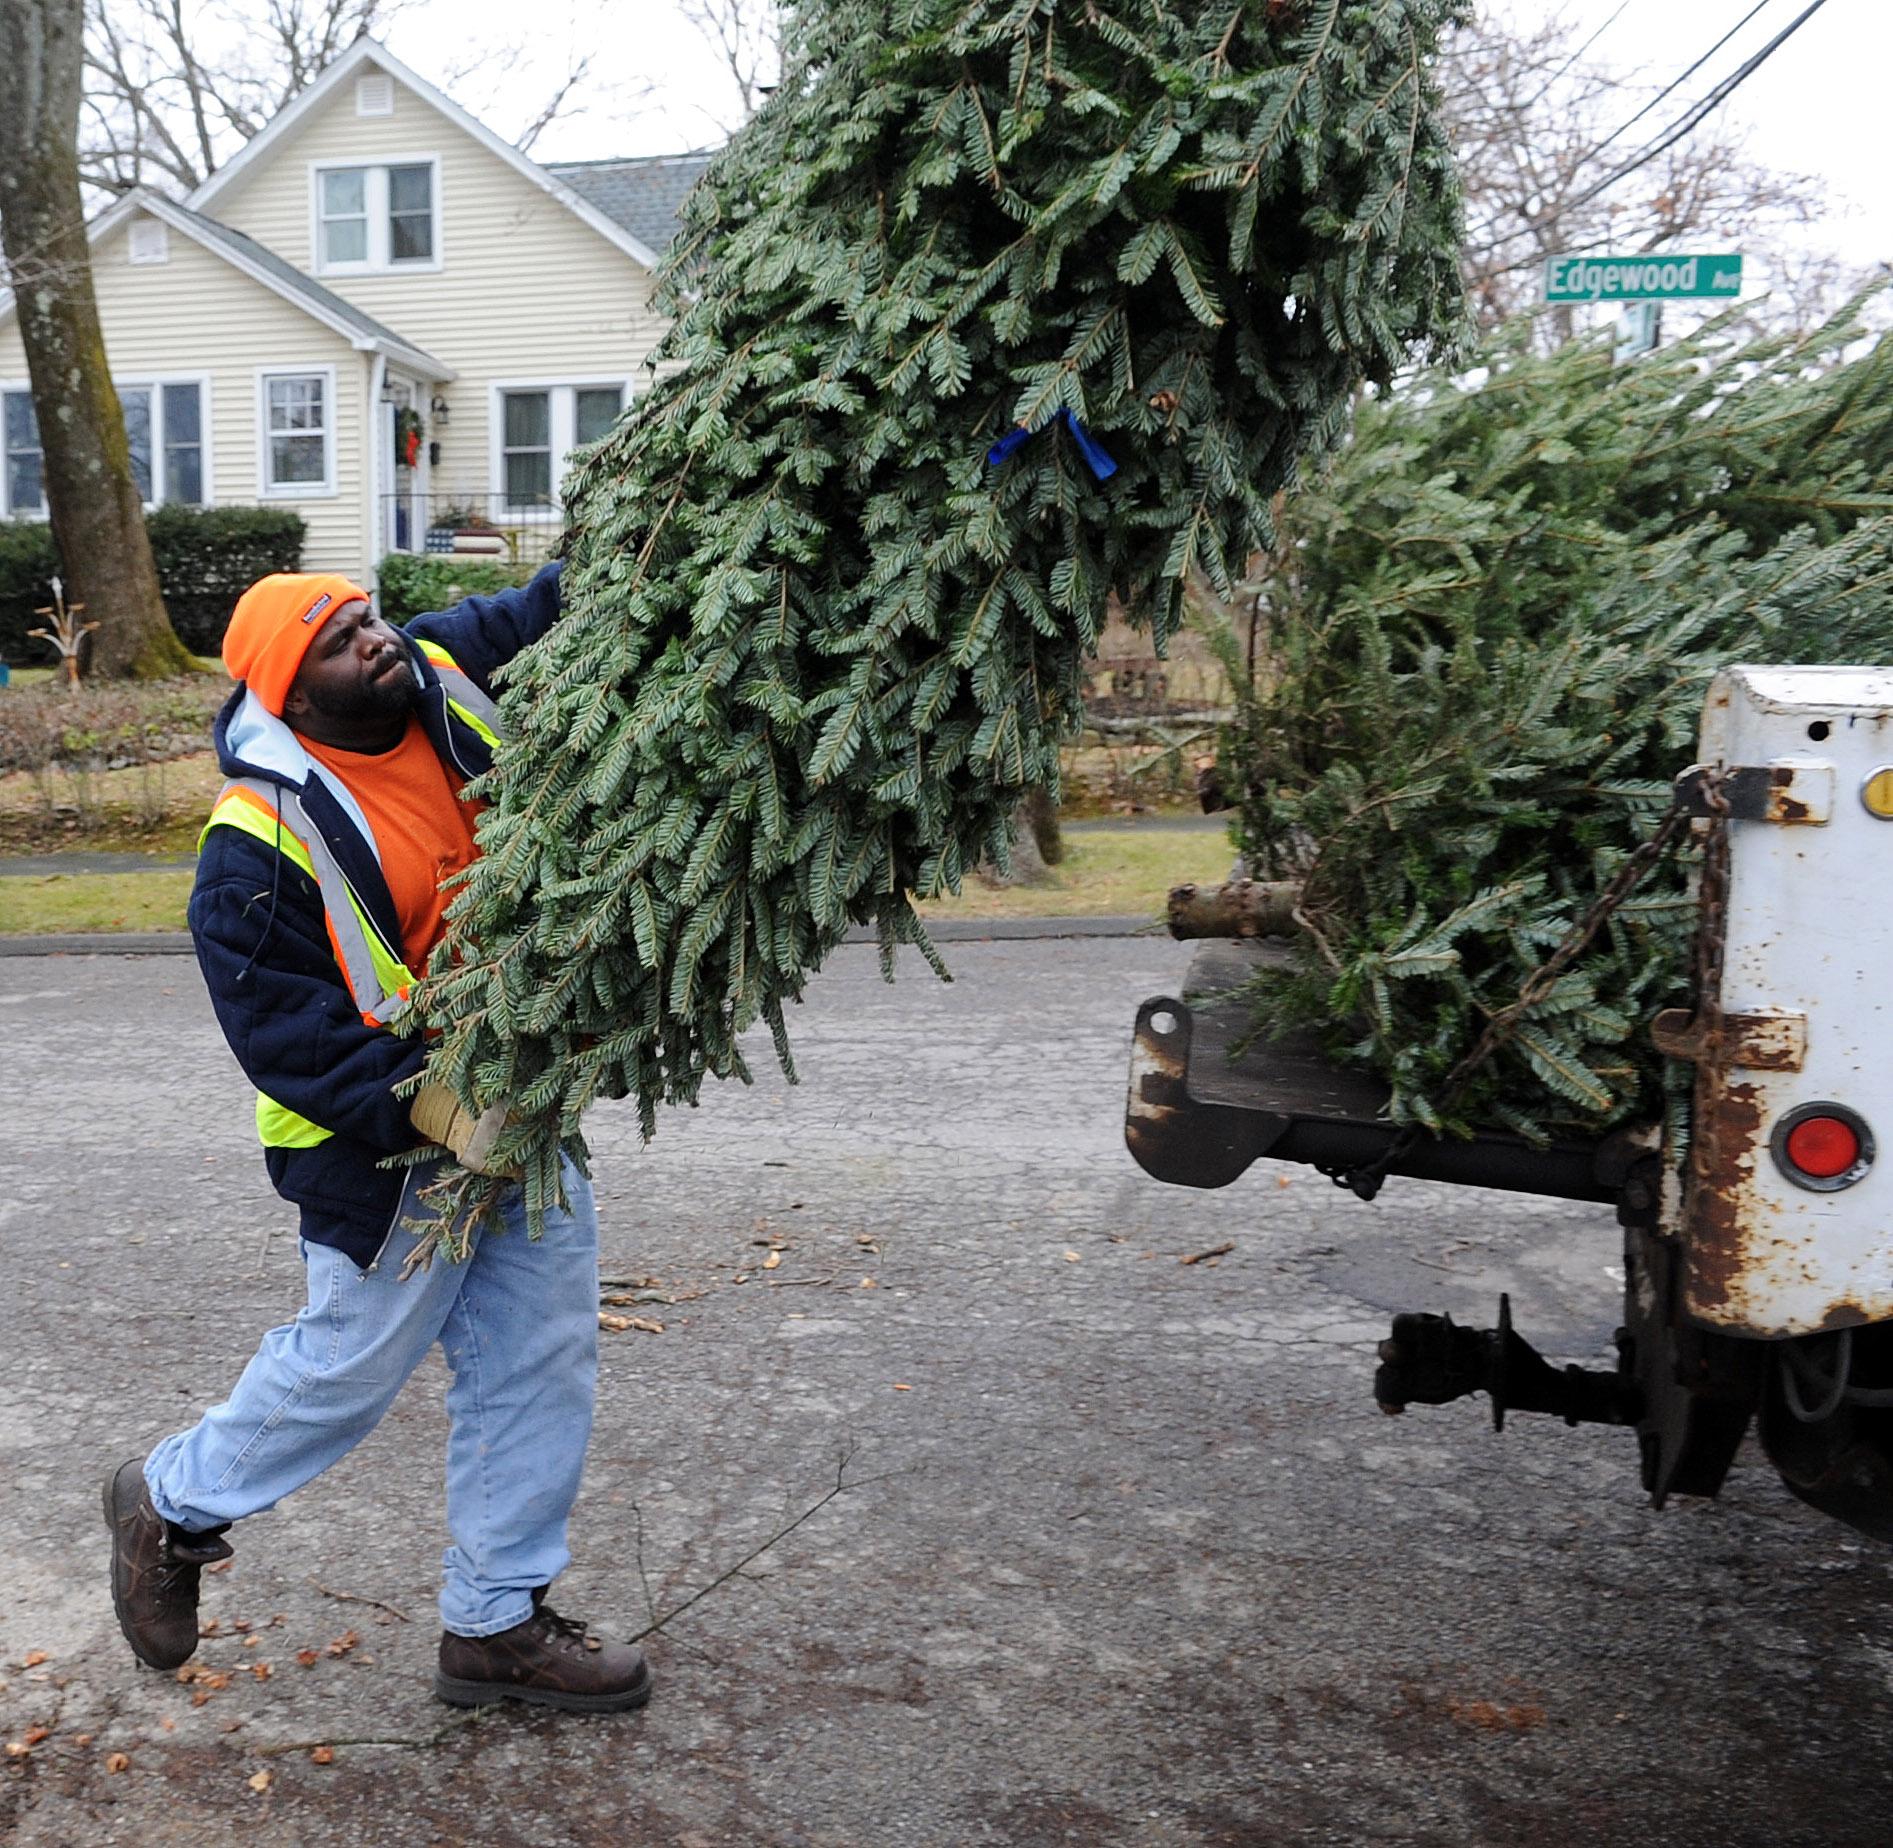 Curbside Christmas tree pickup recycling begins Jan. 2 in Middletown